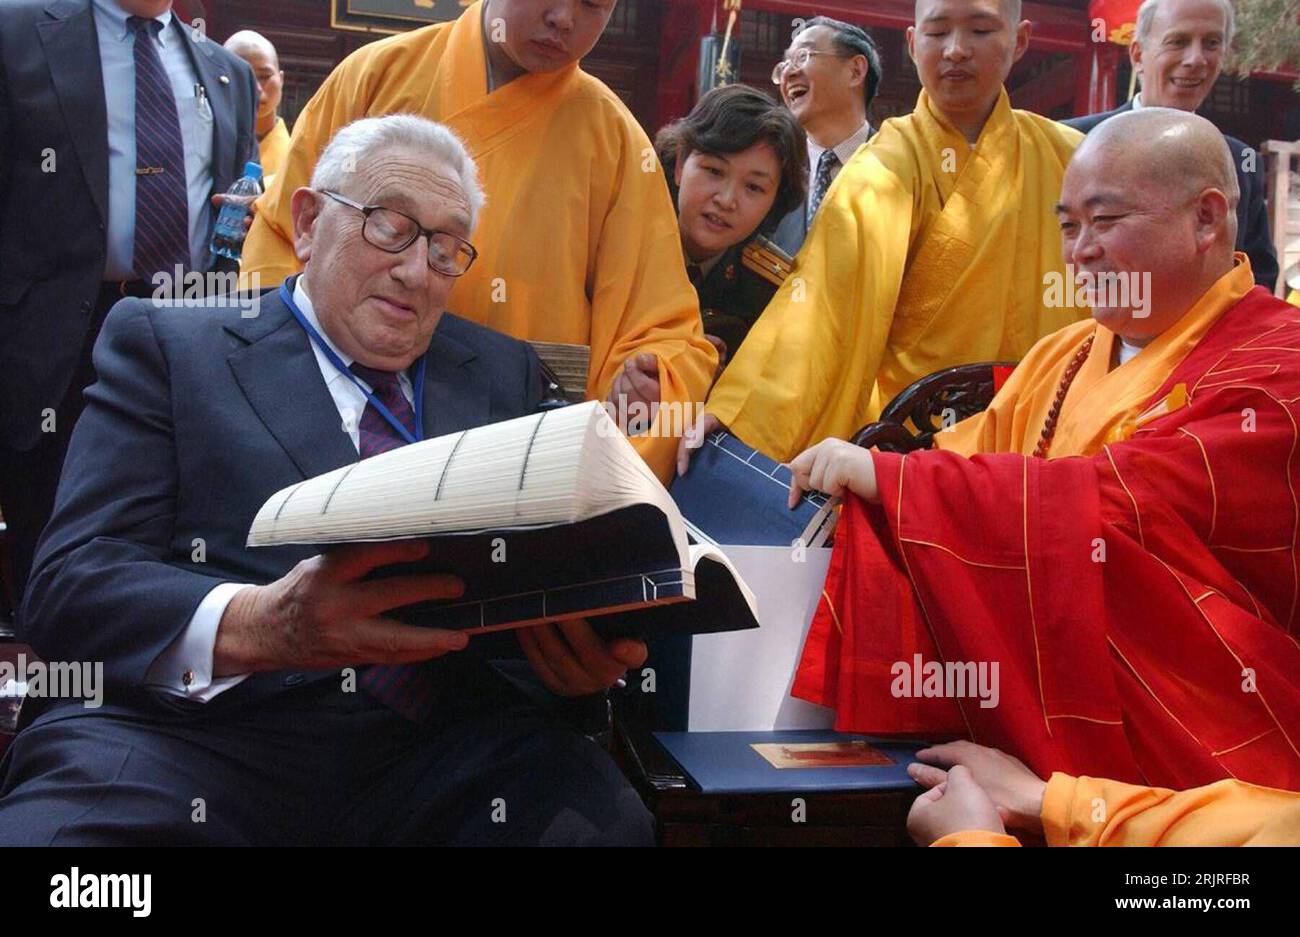 Bildnummer: 51409512  Datum: 12.05.2006  Copyright: imago/Xinhua Henry A. Kissinger (USA) liest in einem Buch von Shi Yongxin (re., CHN/Abt des Shongshan Shaolin-Tempel) während eines Besuchs in Zhengzhou - PUBLICATIONxNOTxINxCHN, Personen , optimistisch; 2006, Zhengzhou, Mönch, Mönche, buddhistischer, buddhistische, Politik, Politiker; , quer, Kbdig, Gruppenbild, China, Buddhismus, Religion, Randbild, People Stock Photo